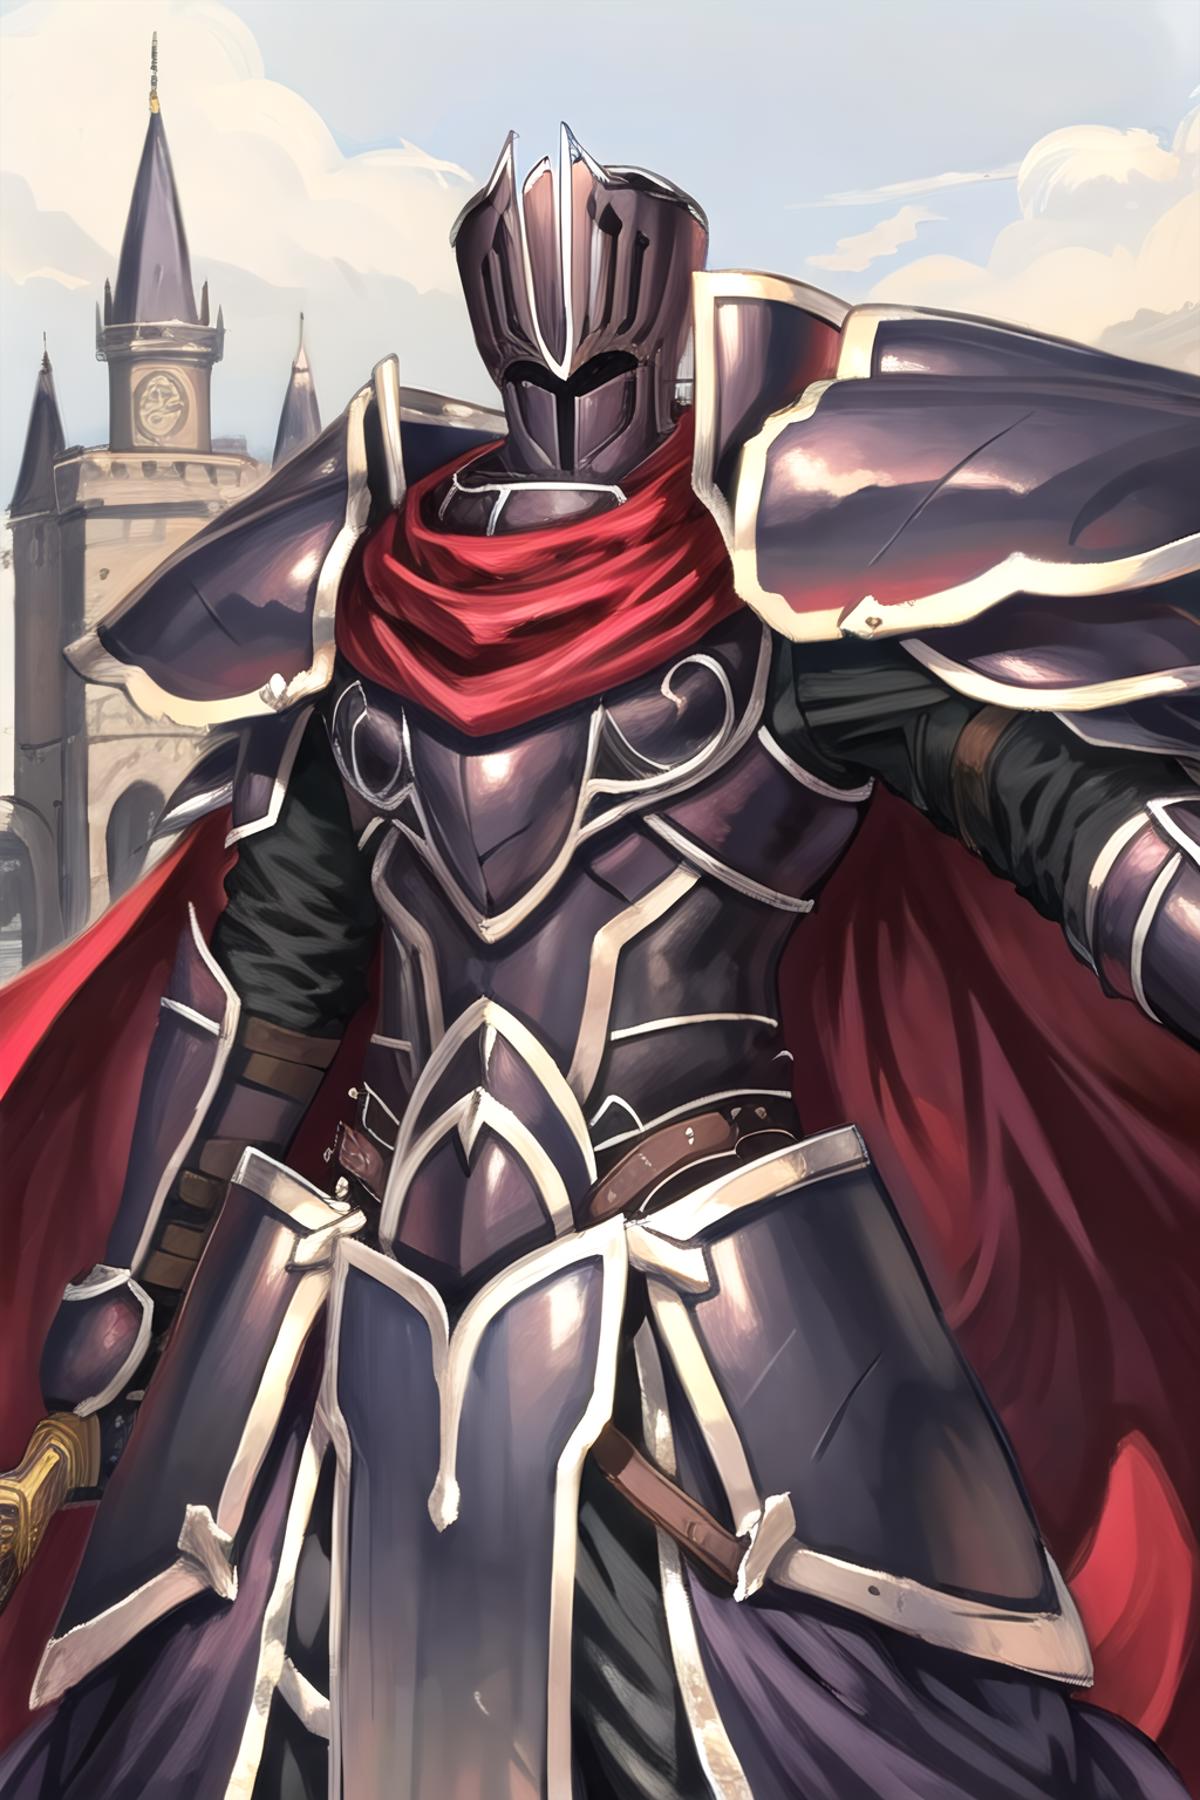 The Black Knight - Fire Emblem image by fireemblemfan